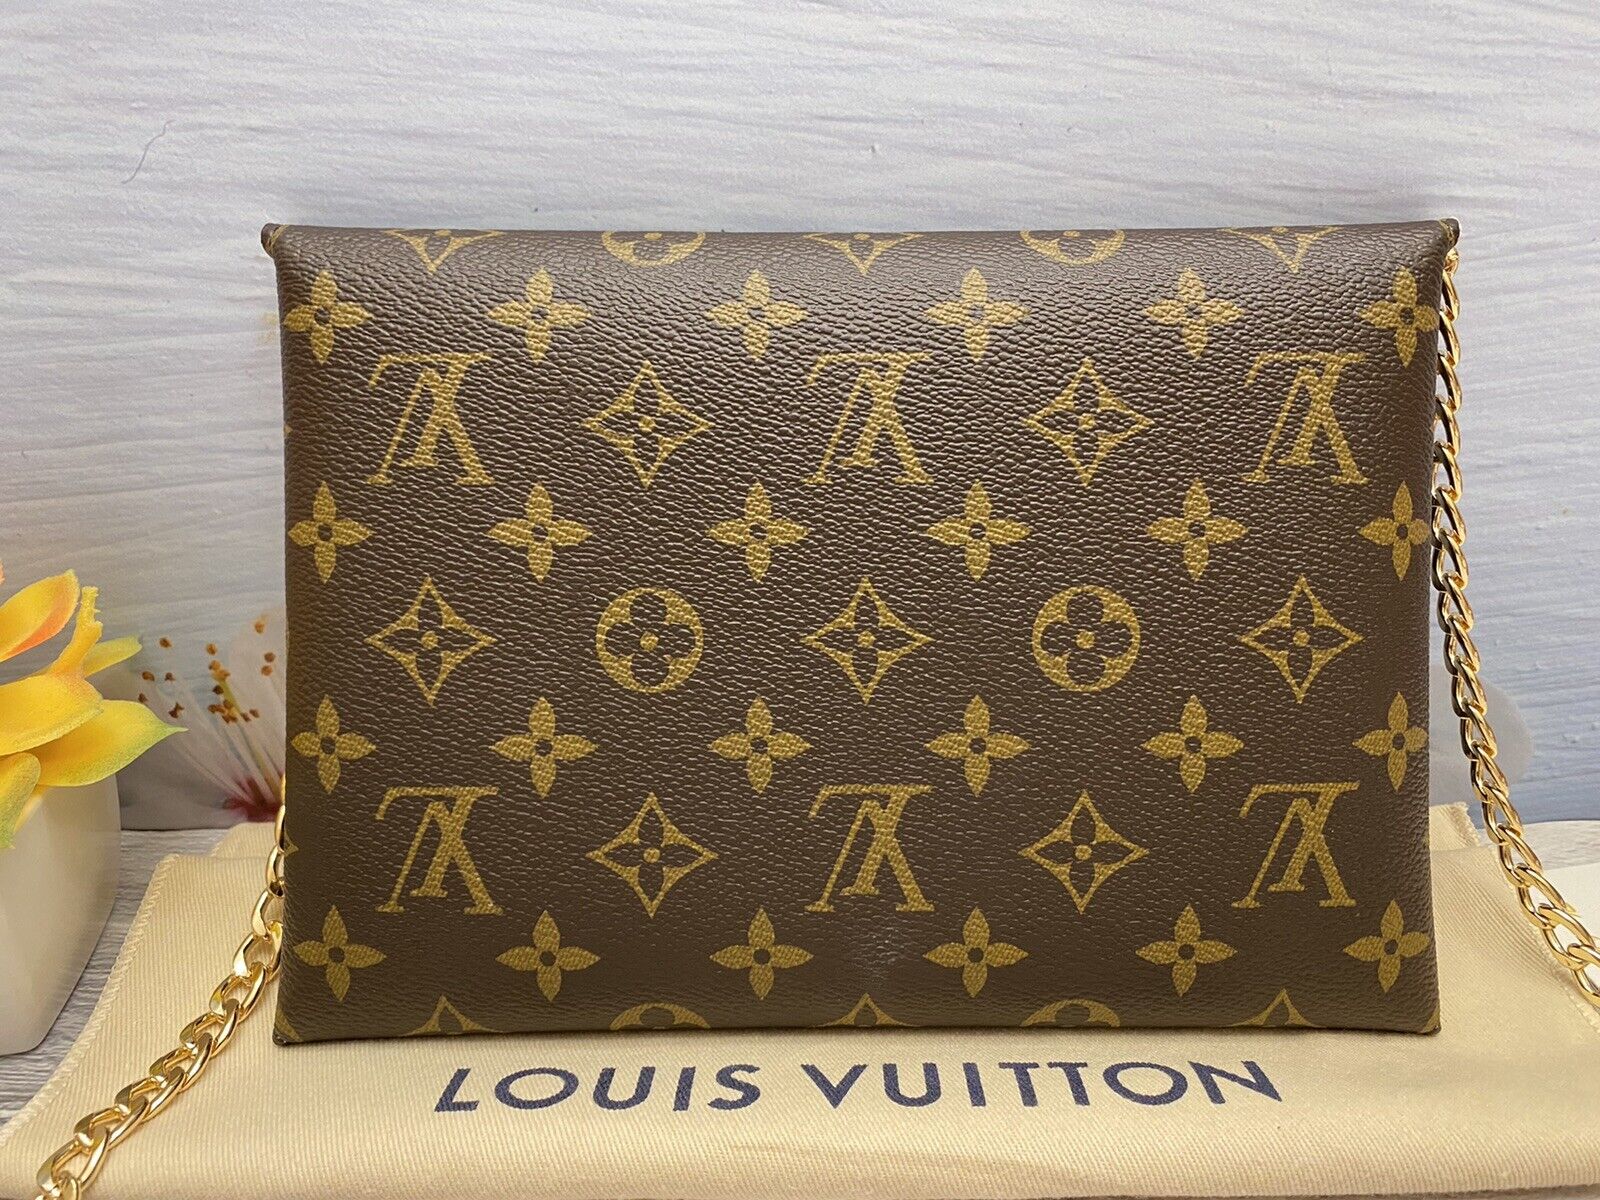 Louis Vuitton kirigami bag insert